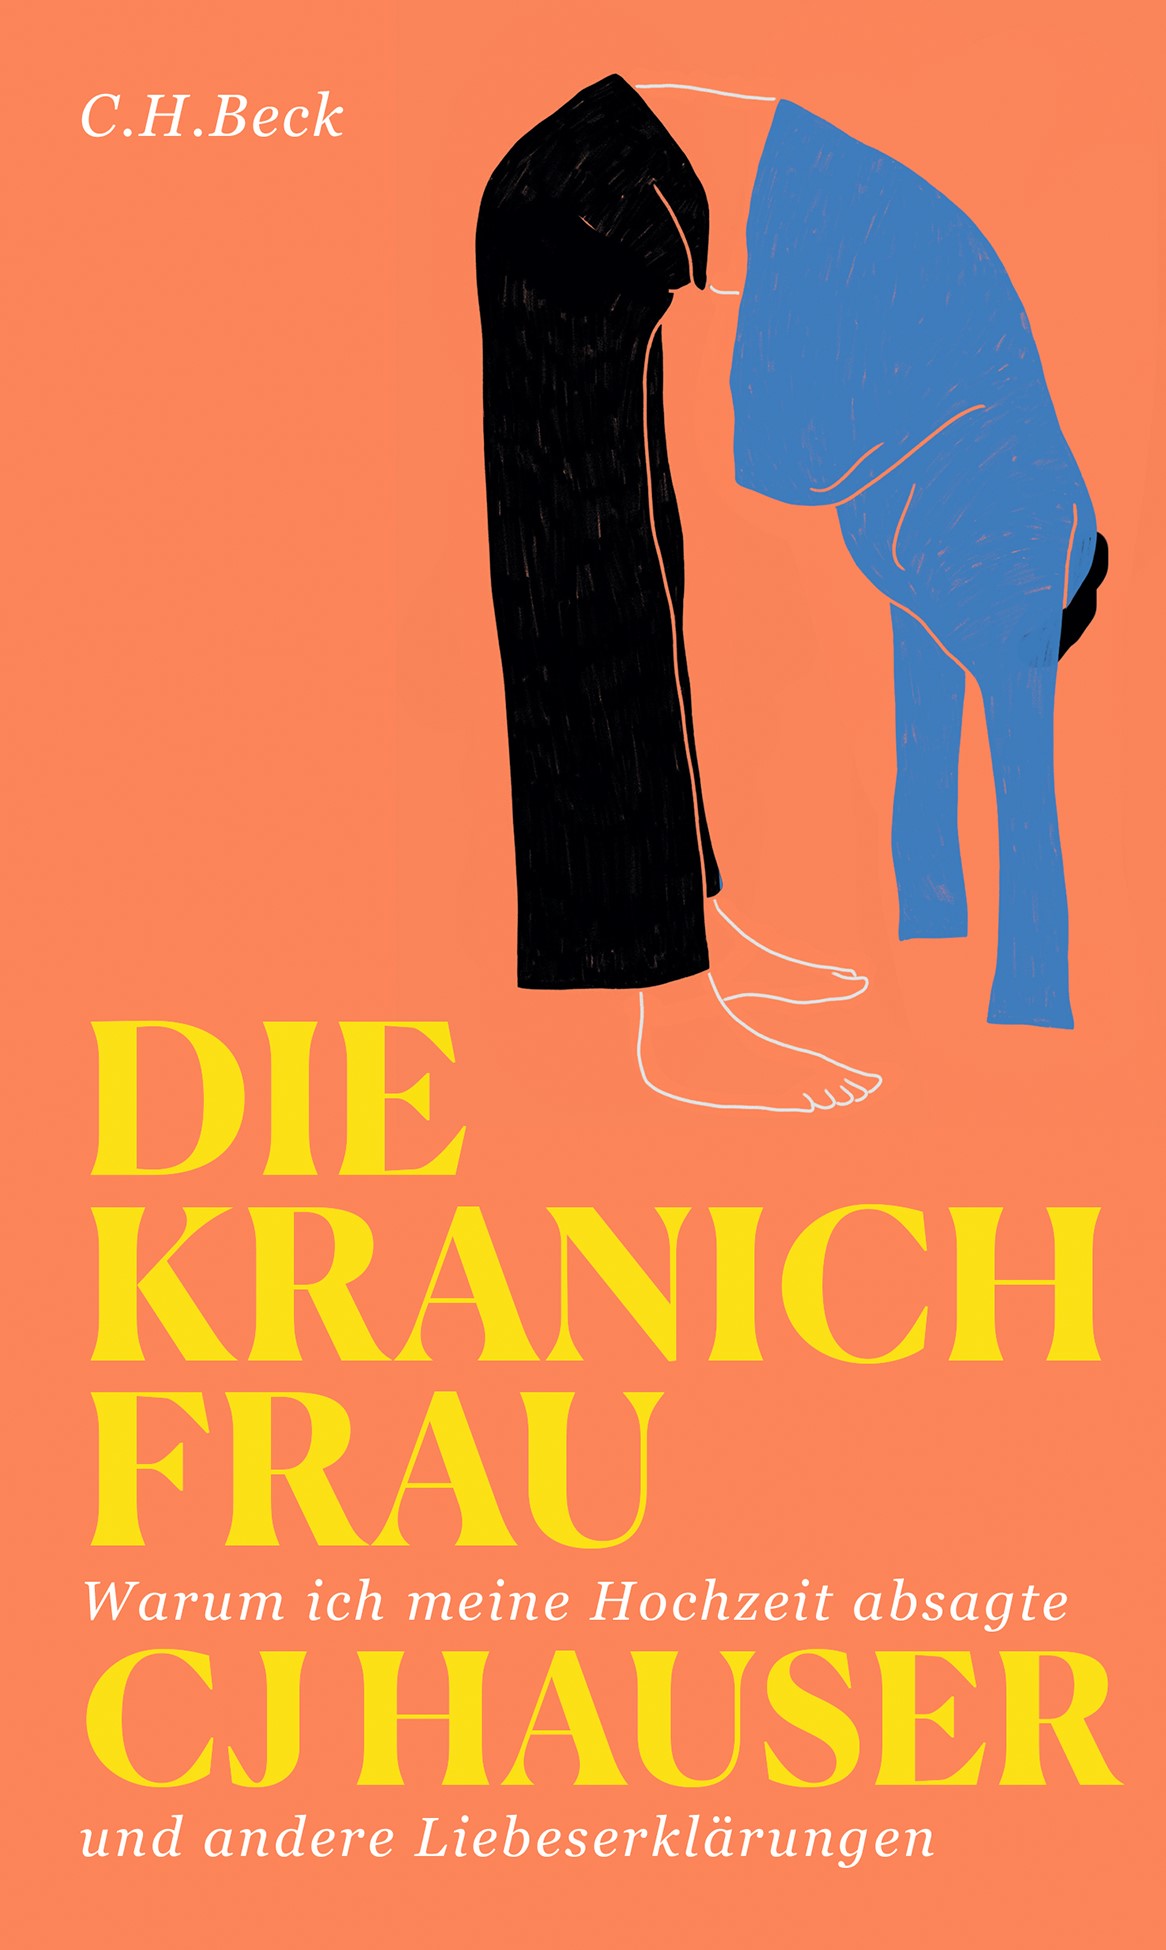 Cover: Hauser, CJ, Die Kranichfrau